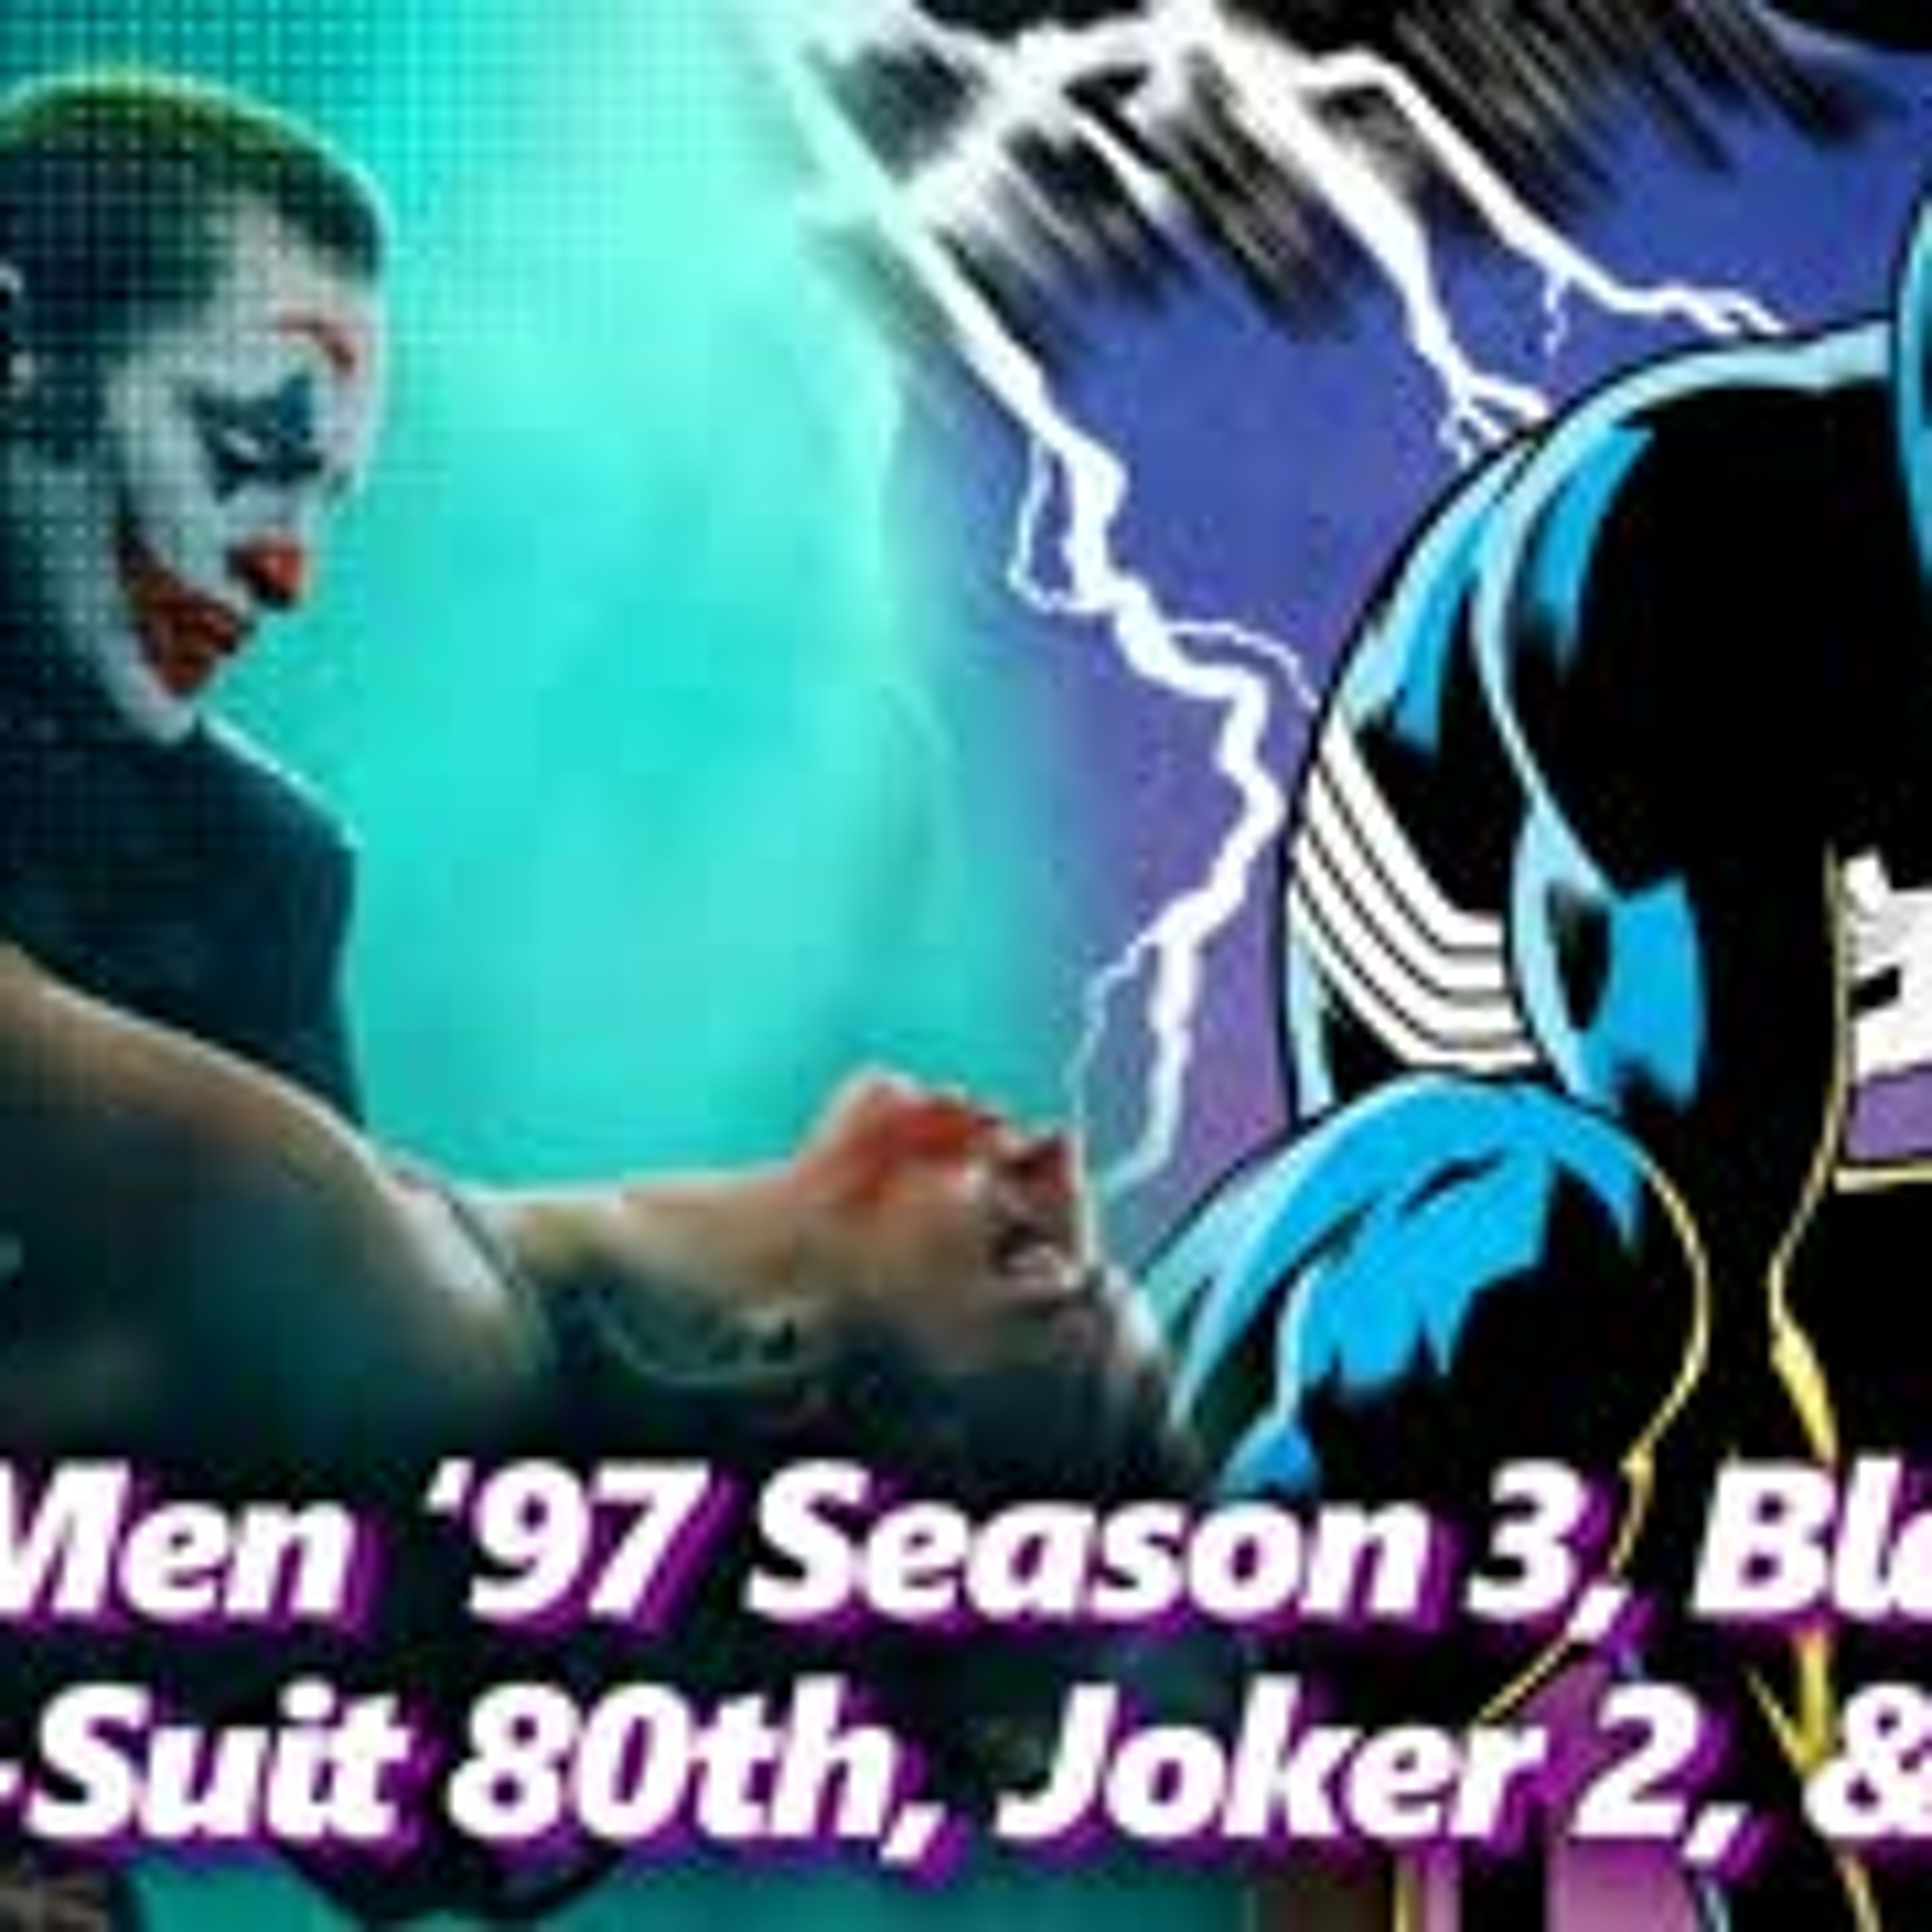 Black Spider-Suit 40th, X-Men ’97 Season 3, Joker 2, & More! - Absolute Comics